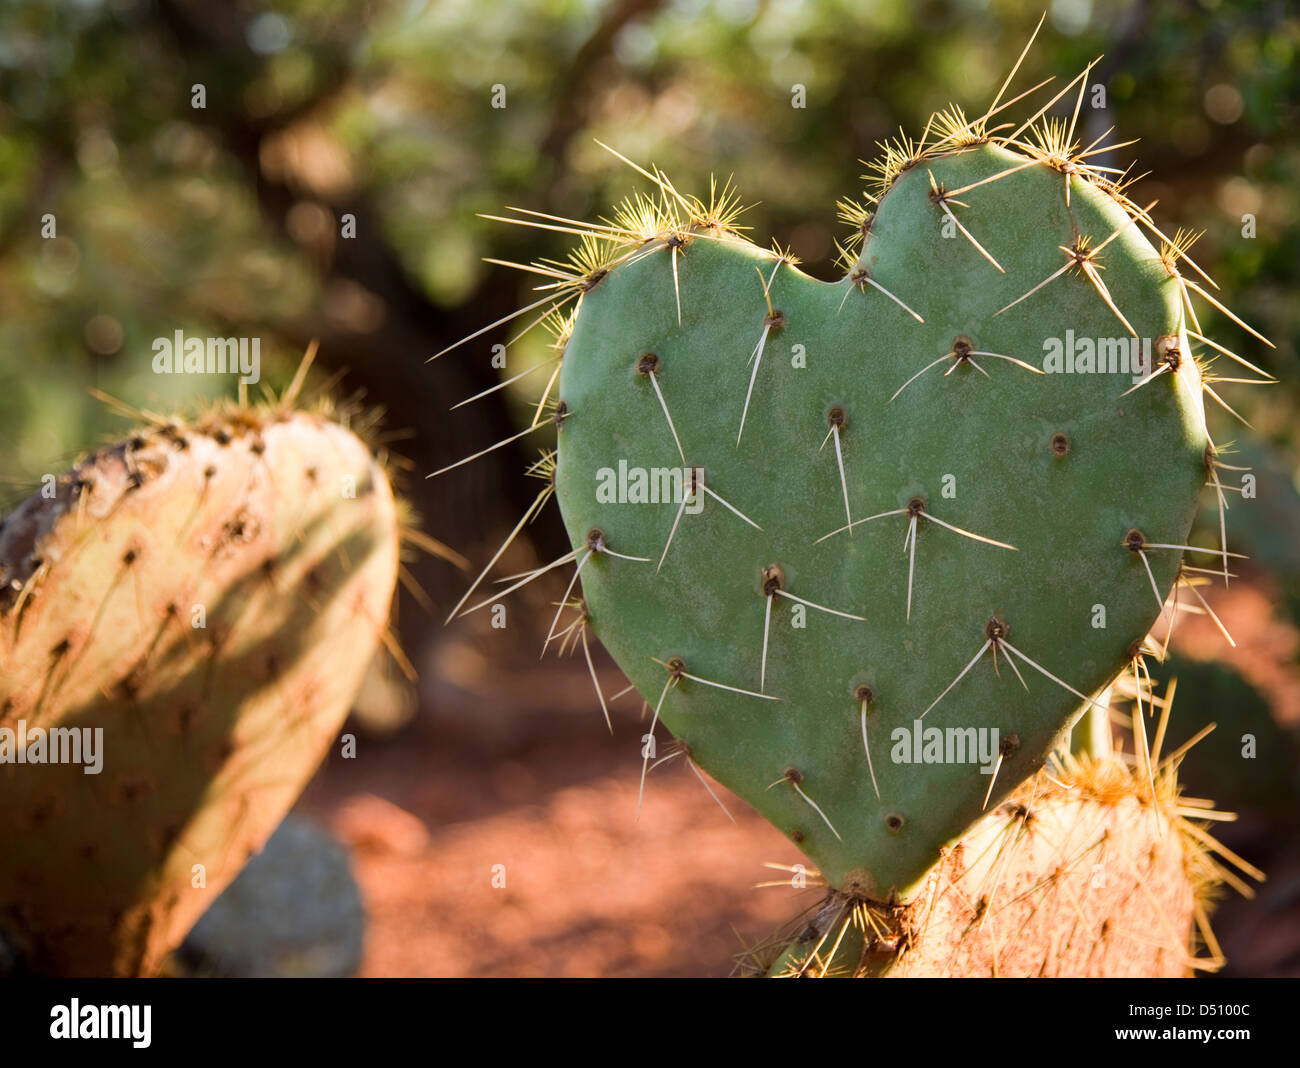 Kaktus-Blatt in der Form eines Herzens (Felge Beleuchtung) Stockfoto